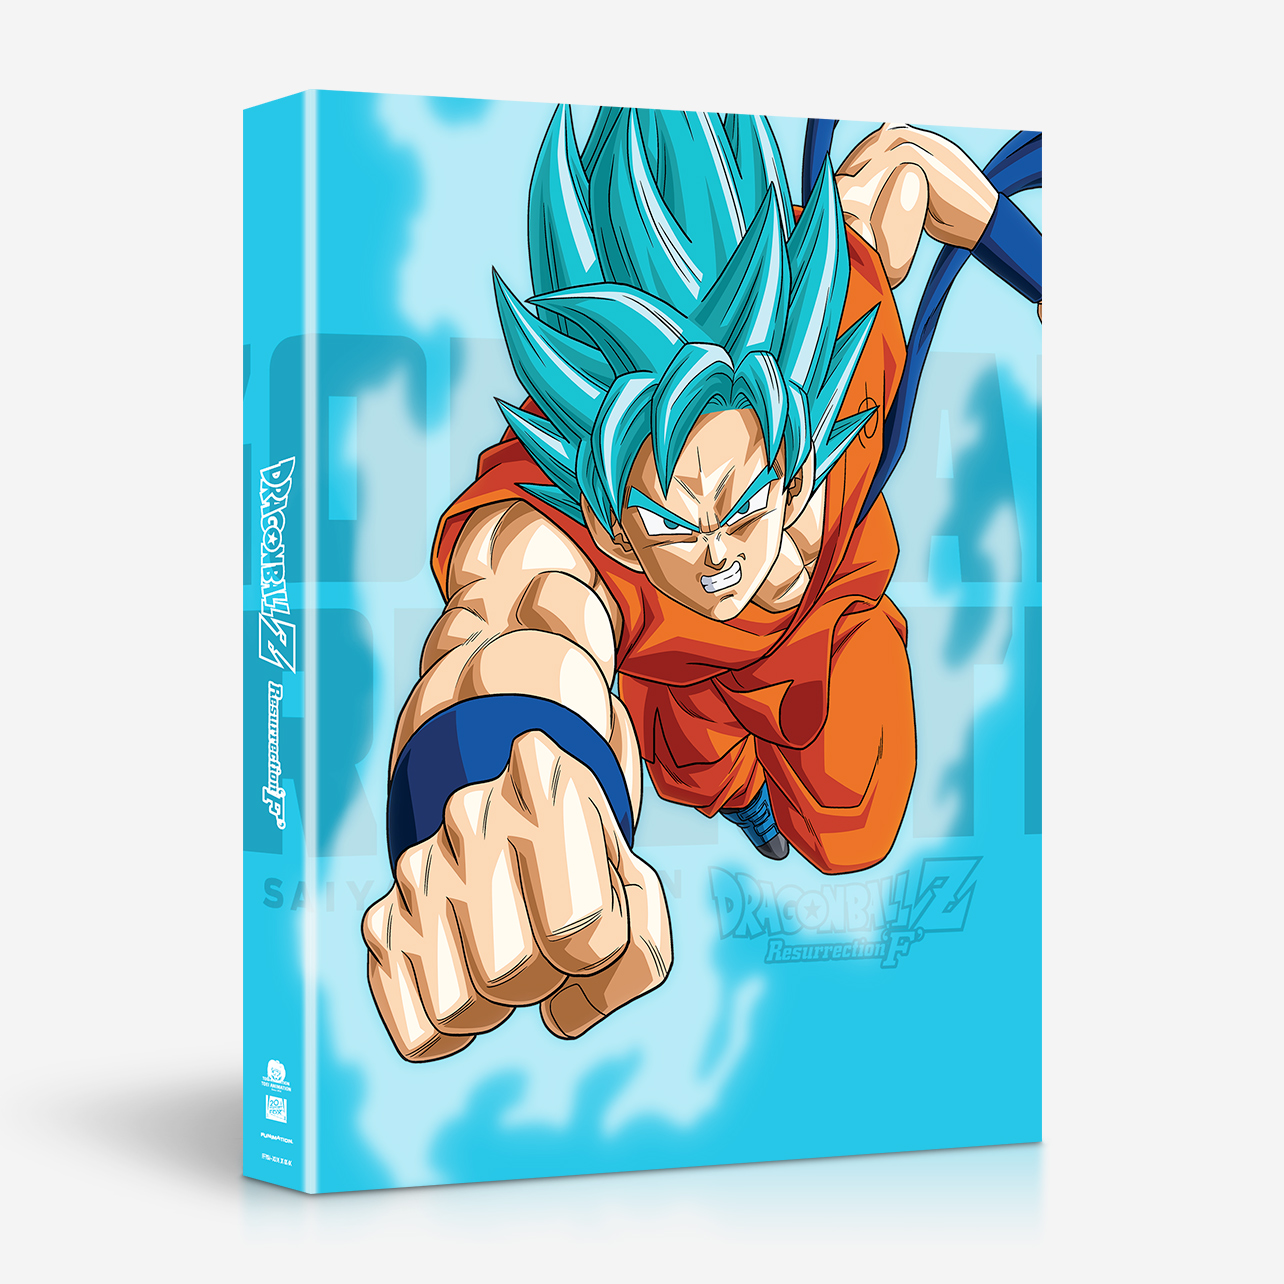 Dragon Ball Z: Resurrection F - Collectors Edition - Blu-ray + DVD image count 0